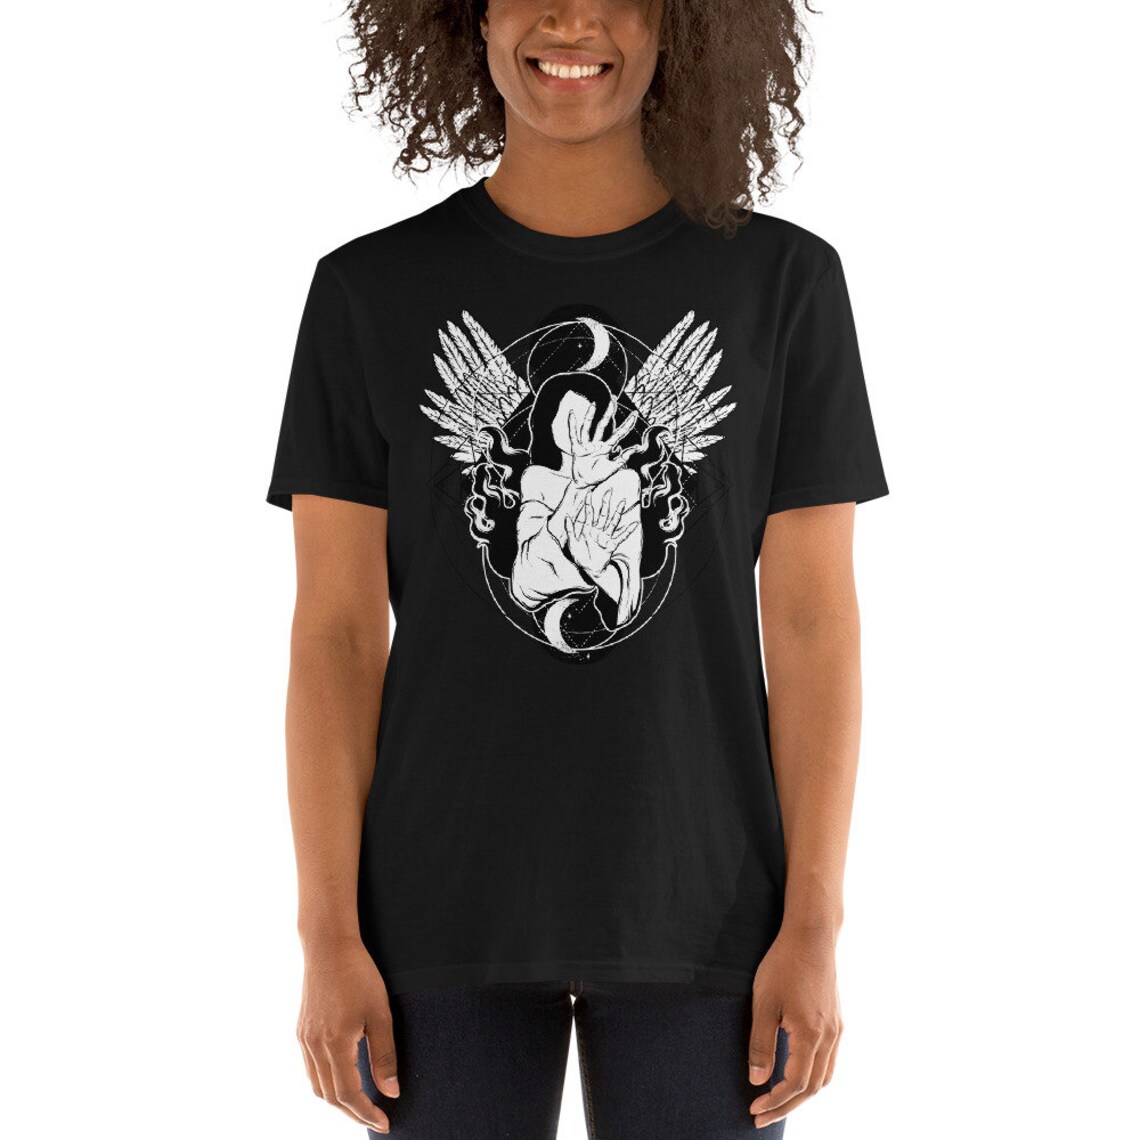 Gothic shirt Girl Graphic shirt Unisex Women t shirt Goth | Etsy